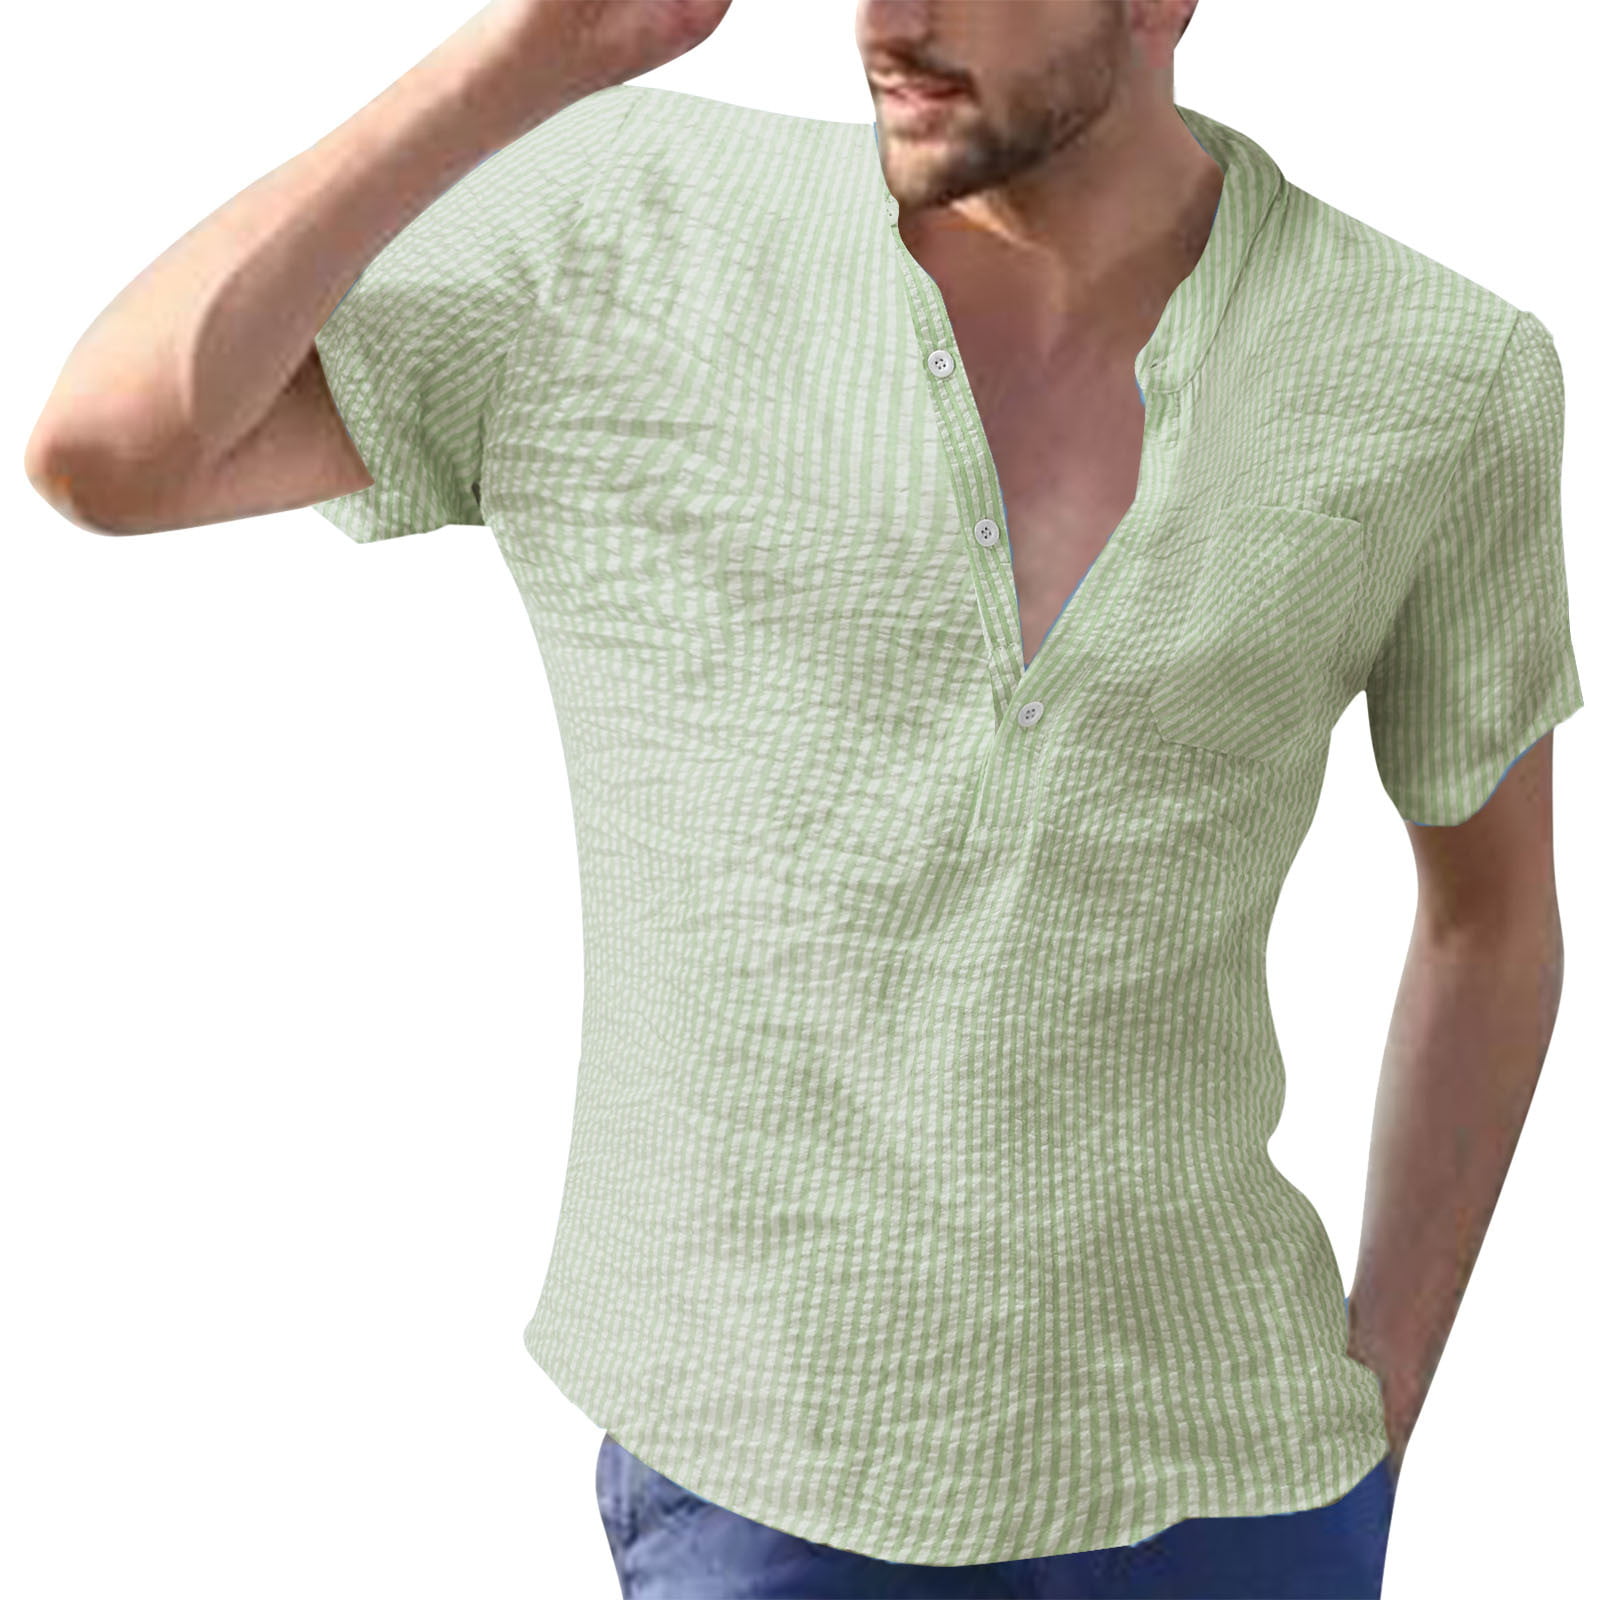 Aayomet Shirts For Men Men Fashion Casual Top Shirt Linen Striped Collar  Pocket Short Sleeves Shirt Plus Size Shirts Green,L 